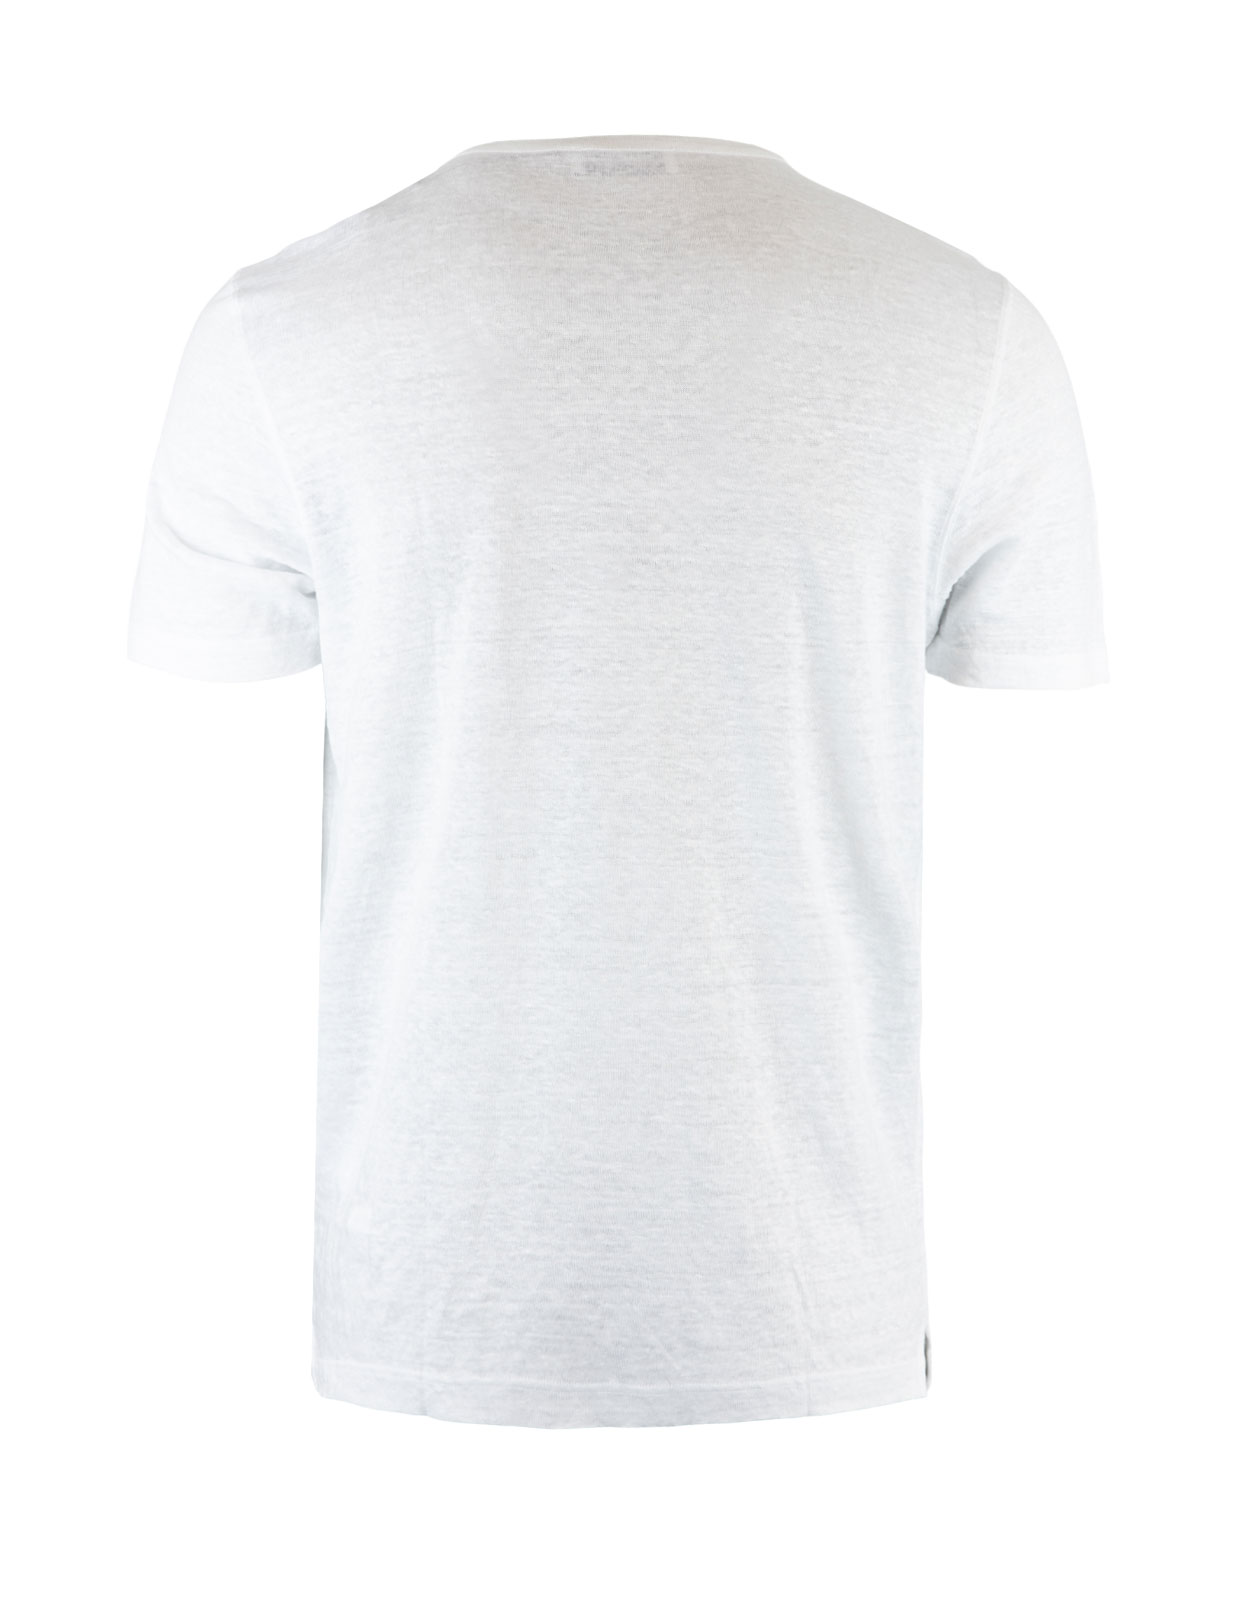 Vintage Linen T-Shirt White